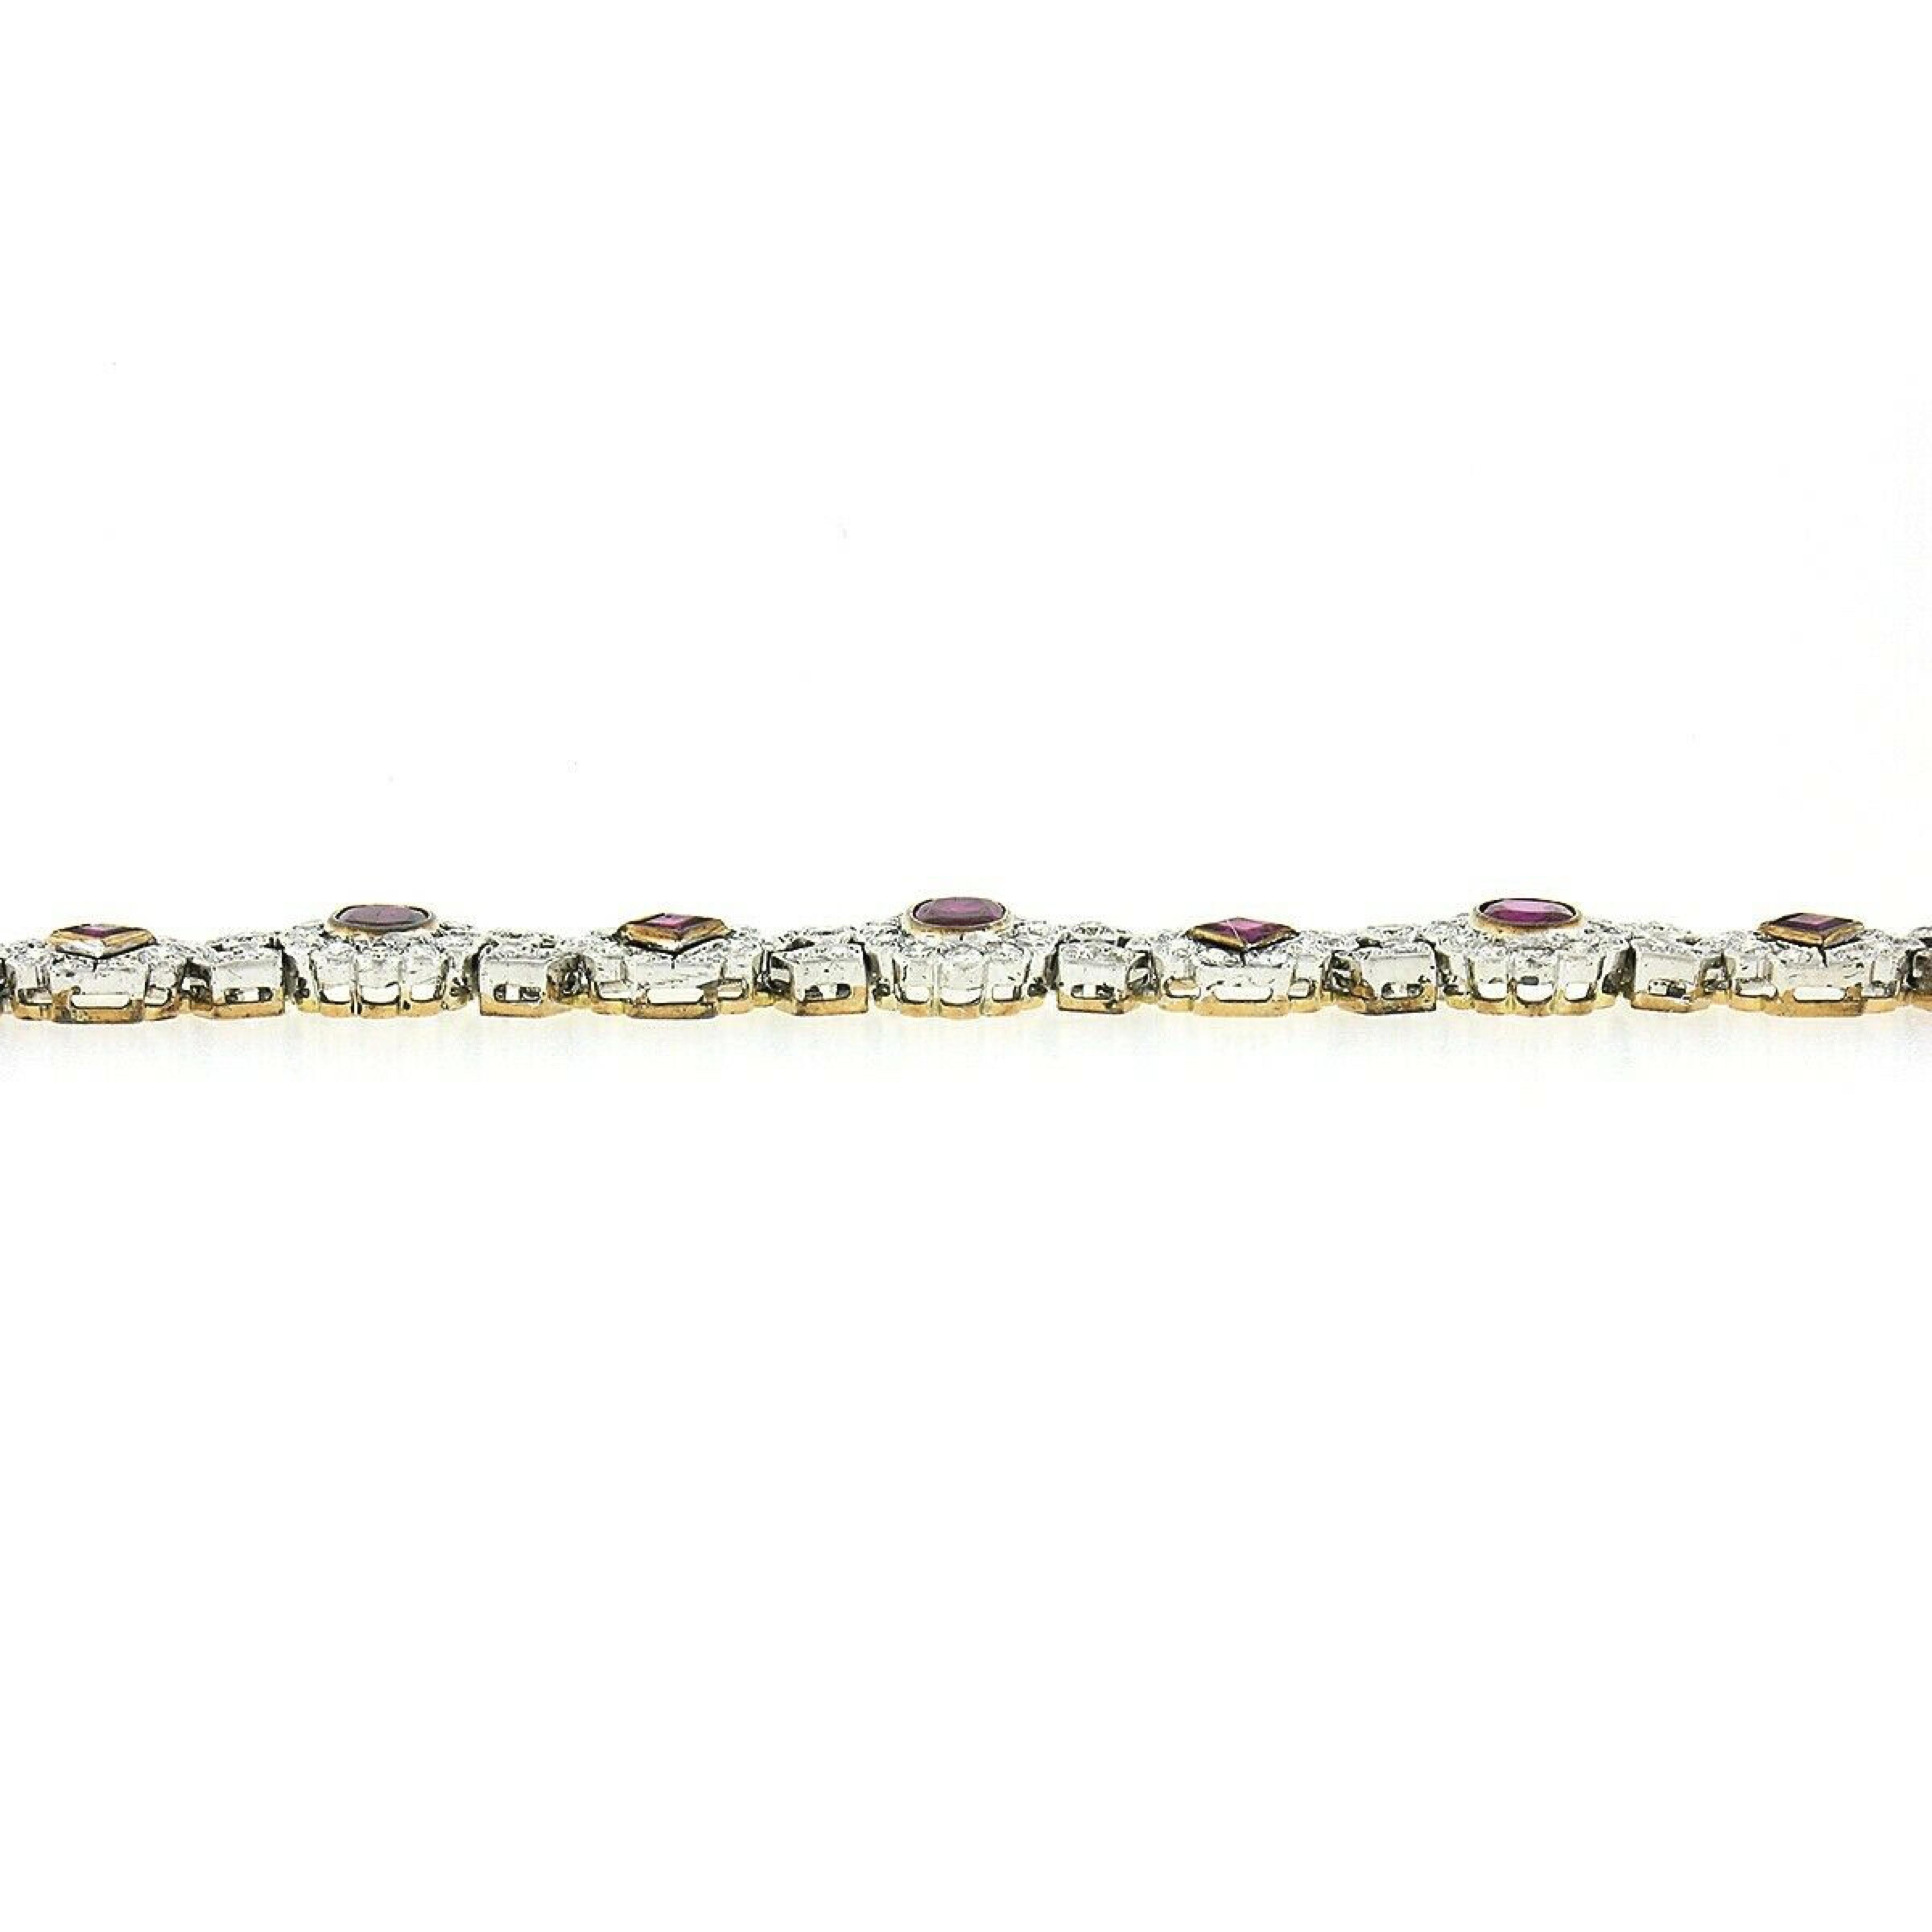 Women's Vintage 14k TT Gold 8.25ct GIA Oval & Square Bezel Burma Ruby & Diamond Bracelet